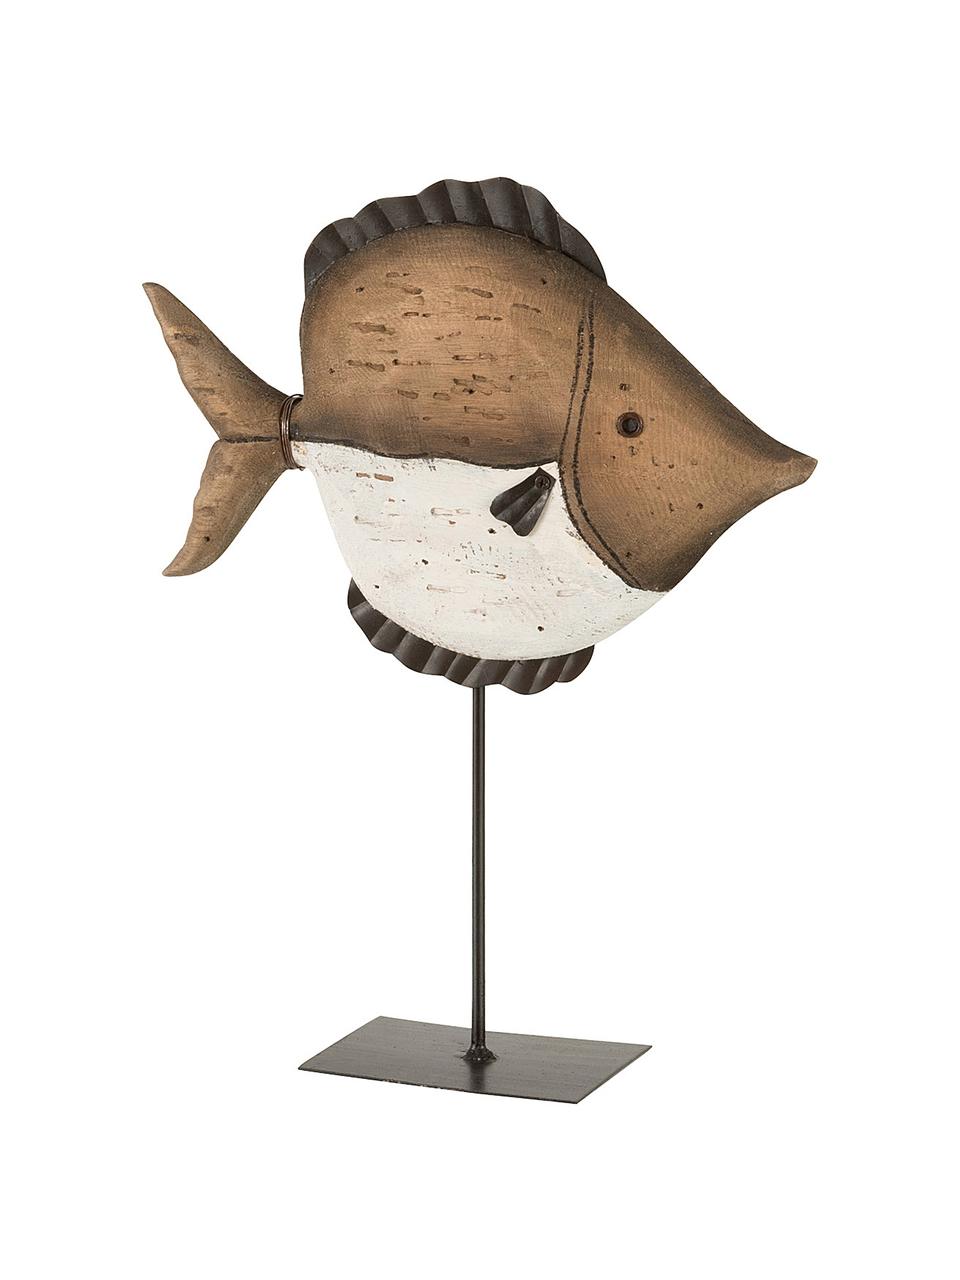 Decoratief object Fish, Hout, Bruin, beige, zwart, 25 x 33 cm